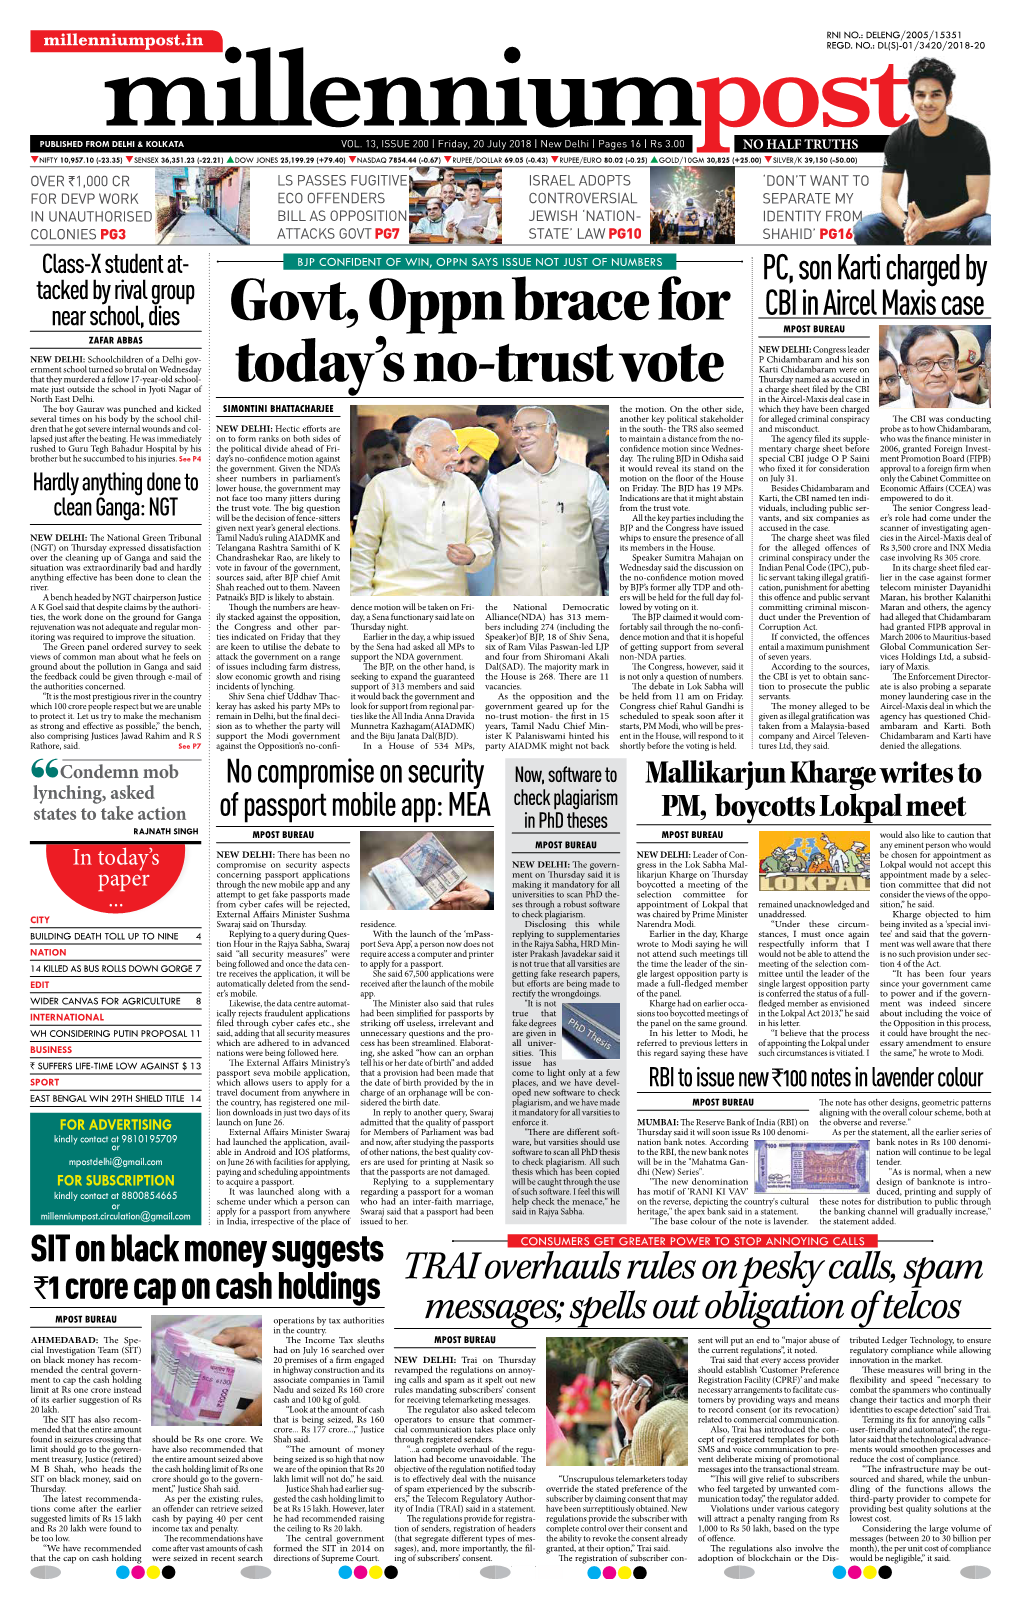 Govt, Oppn Brace for Today's No-Trust Vote